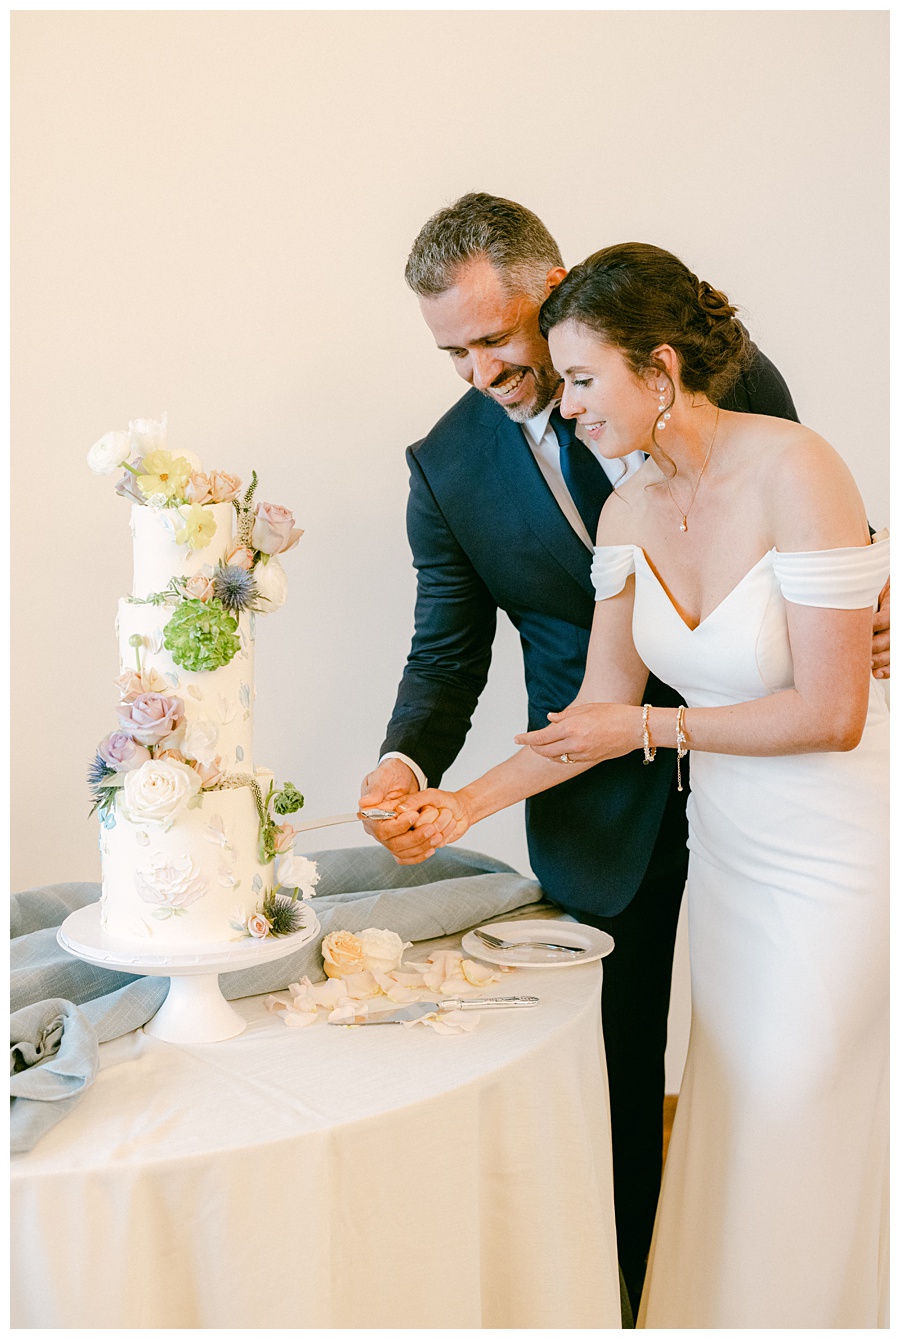 wedding cake, wedding bakery, bride and groom, cake cutting, wedding day, wedding florist, north carolina wedding photographer